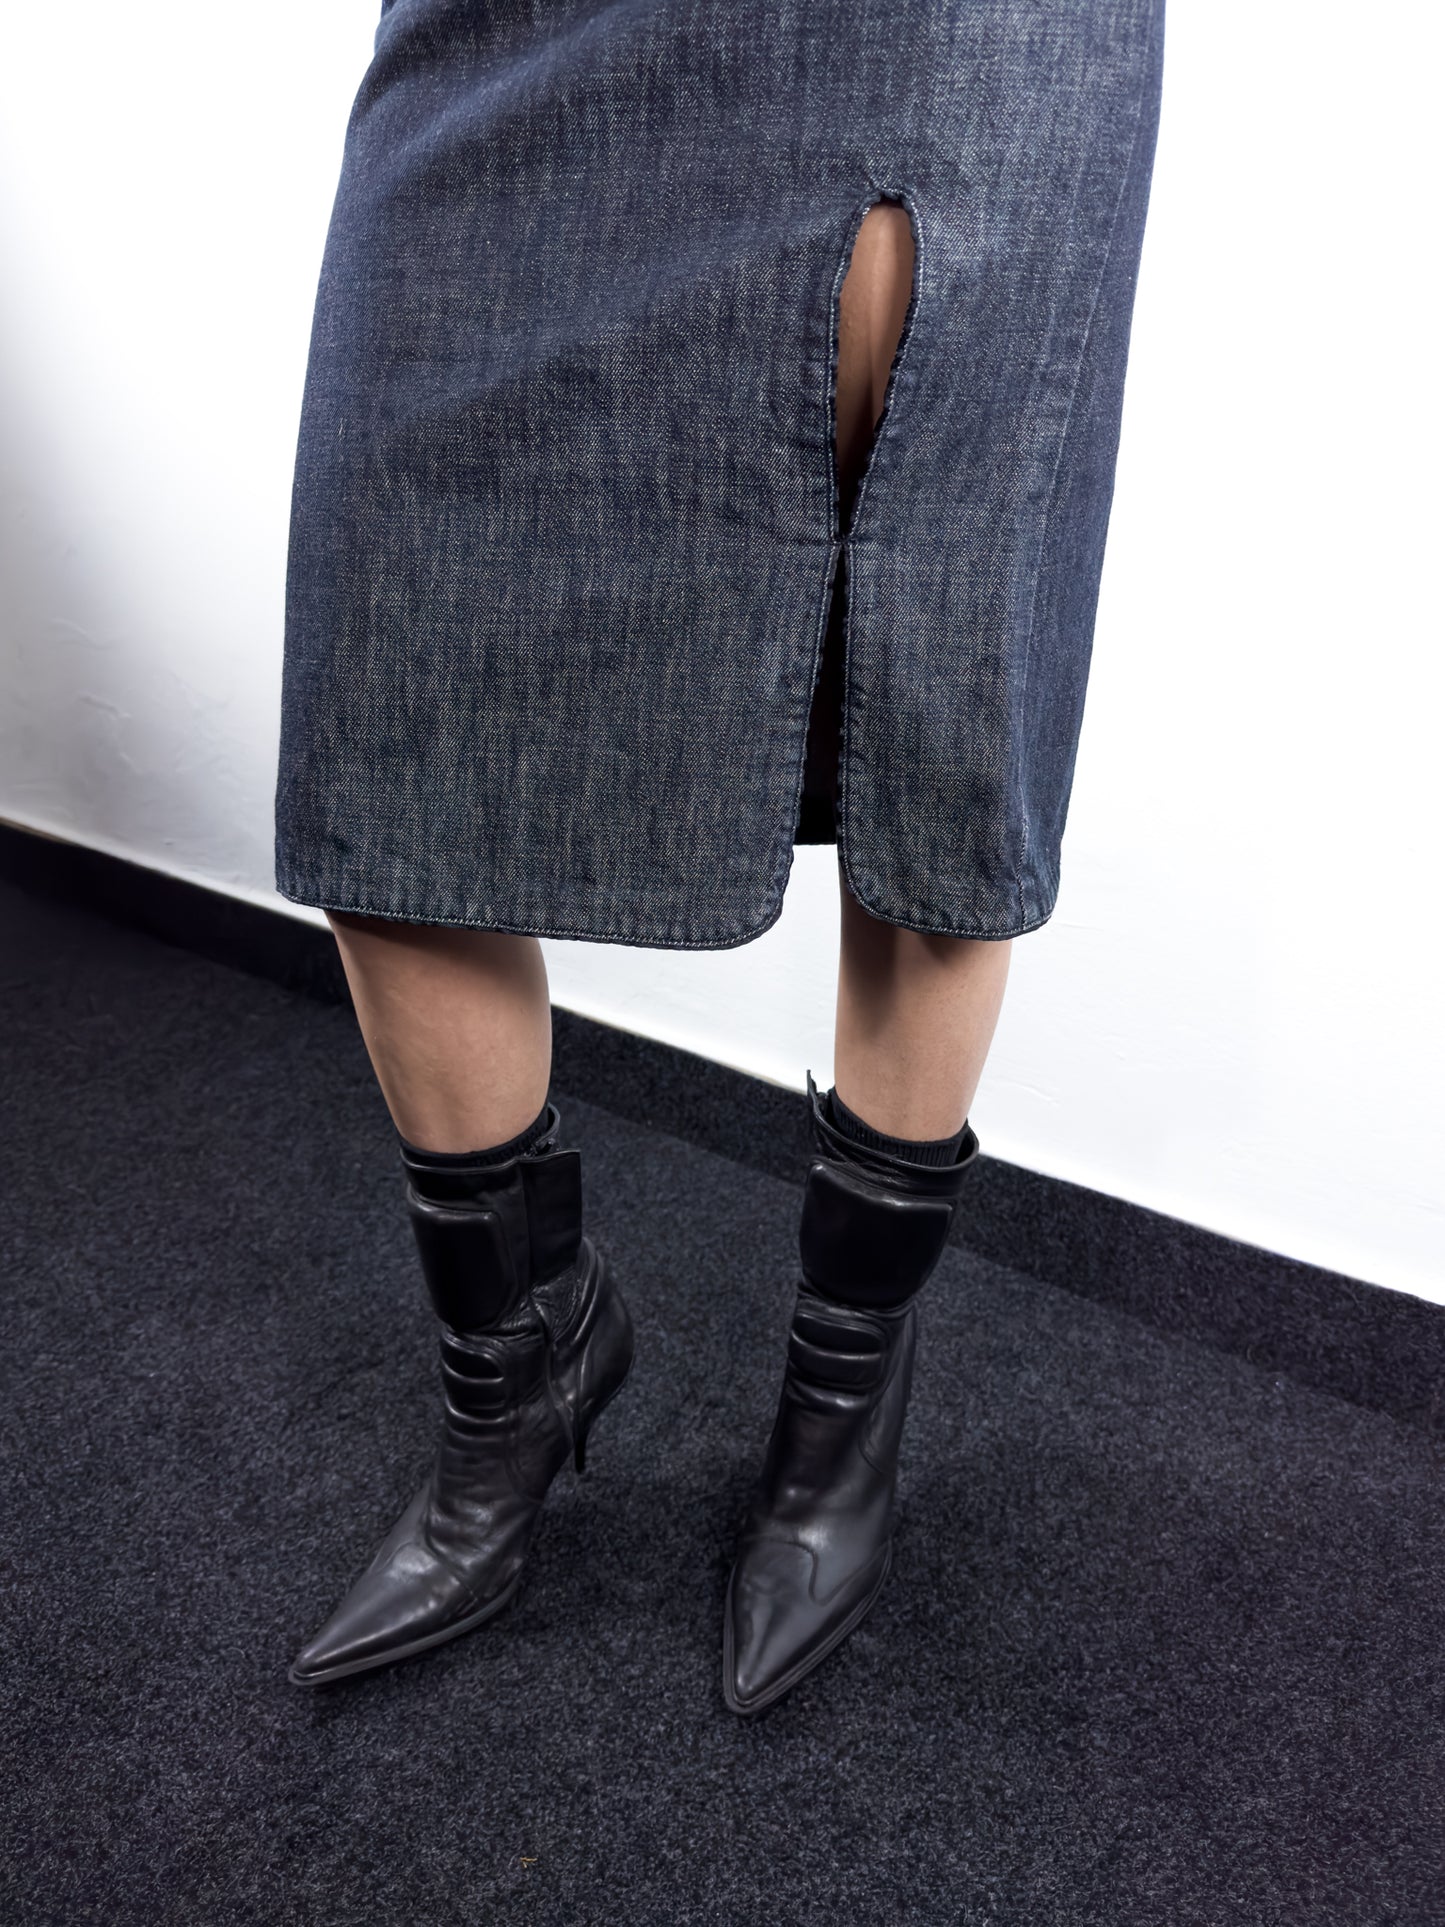 2000's StyleLab Denim Skirt (38W)